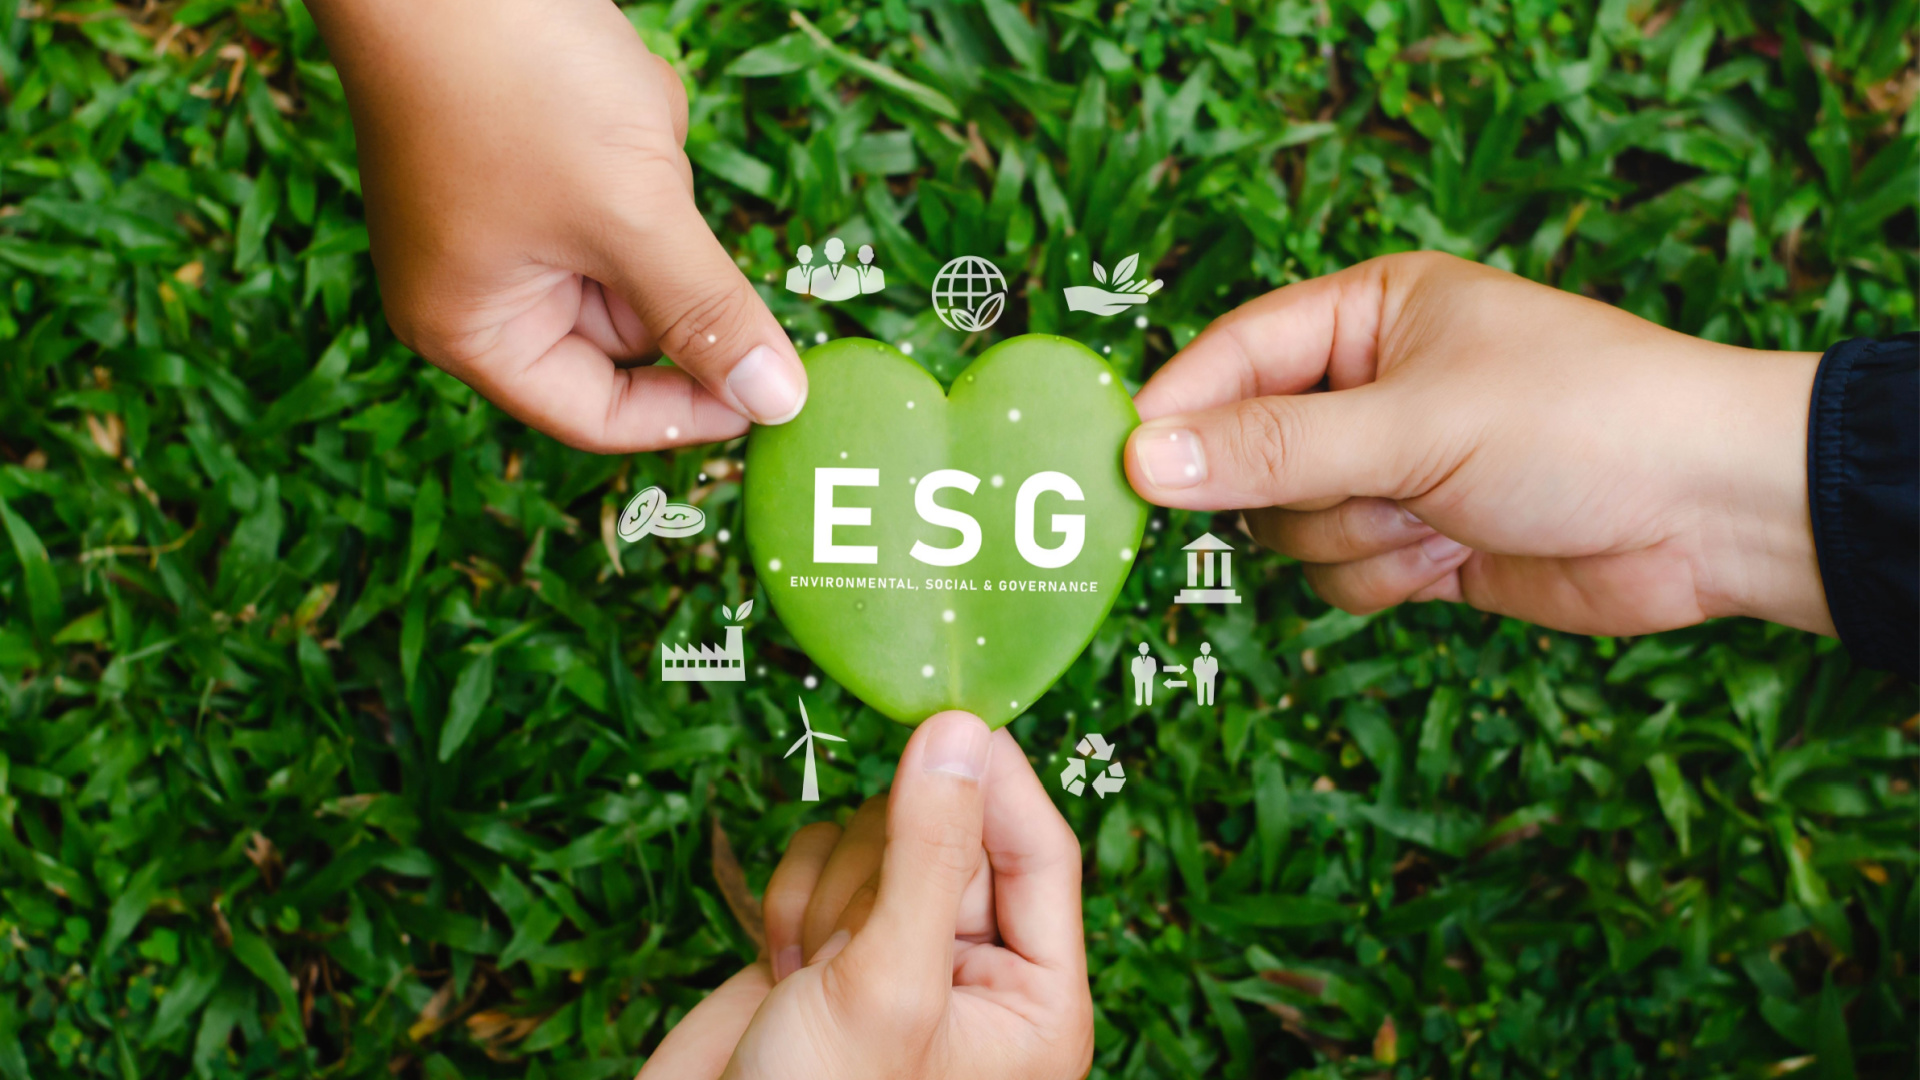 ESGの取り組み事例を紹介! 健康経営や人的資本経営との関係も解説